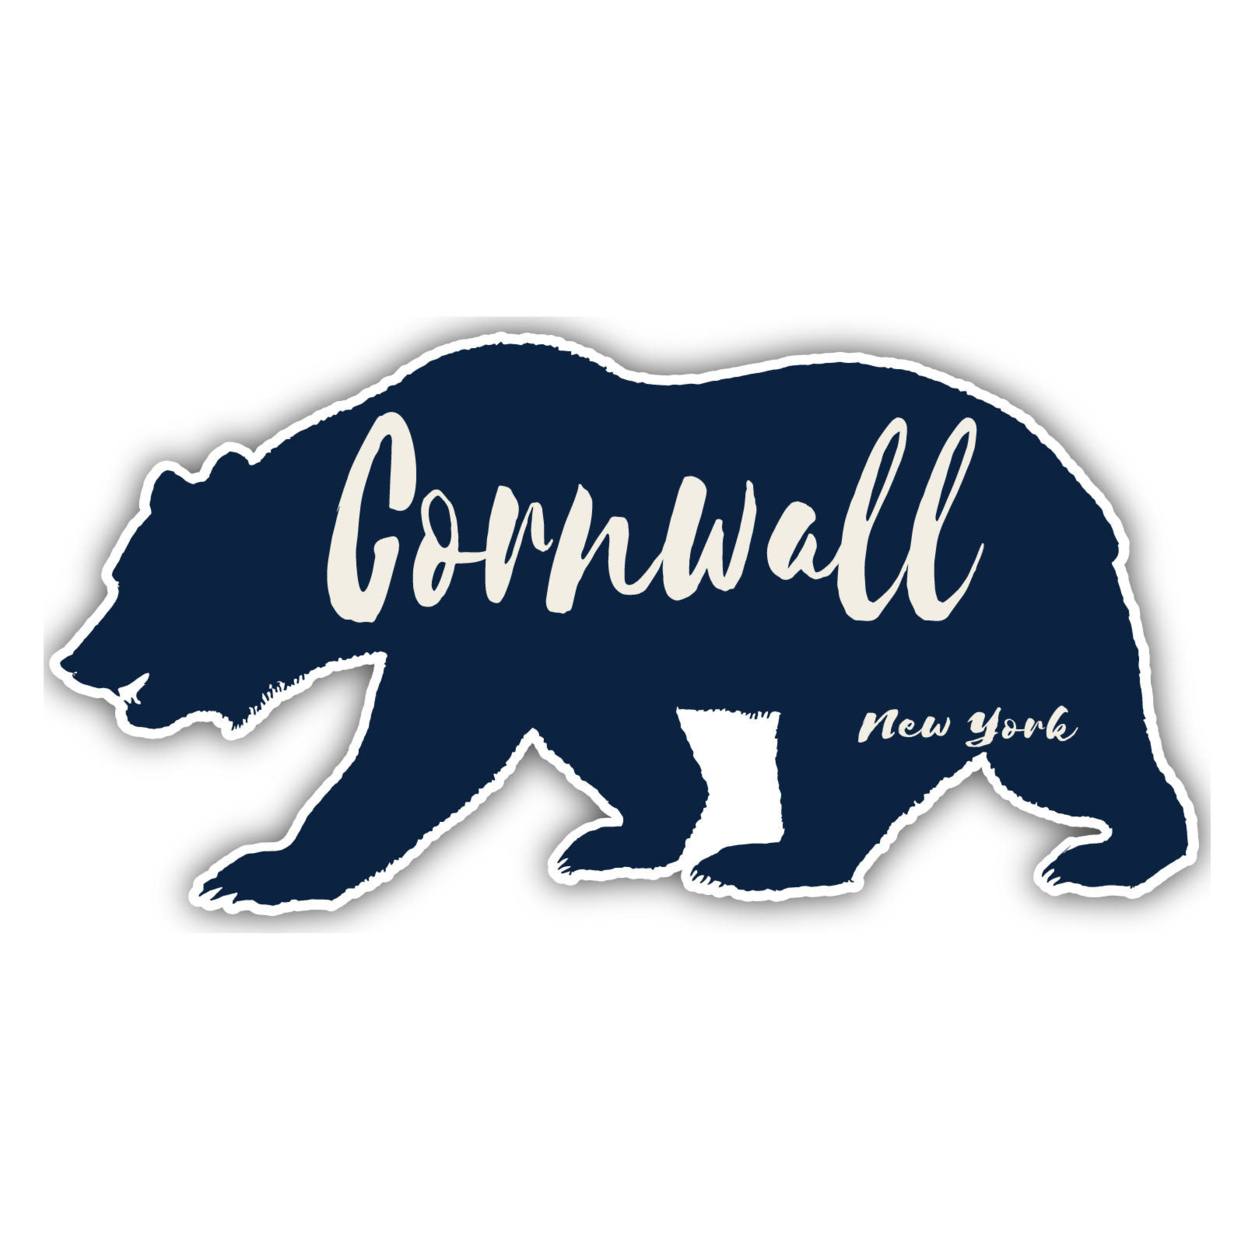 Cornwall New York Souvenir Decorative Stickers (Choose Theme And Size) - Single Unit, 6-Inch, Bear